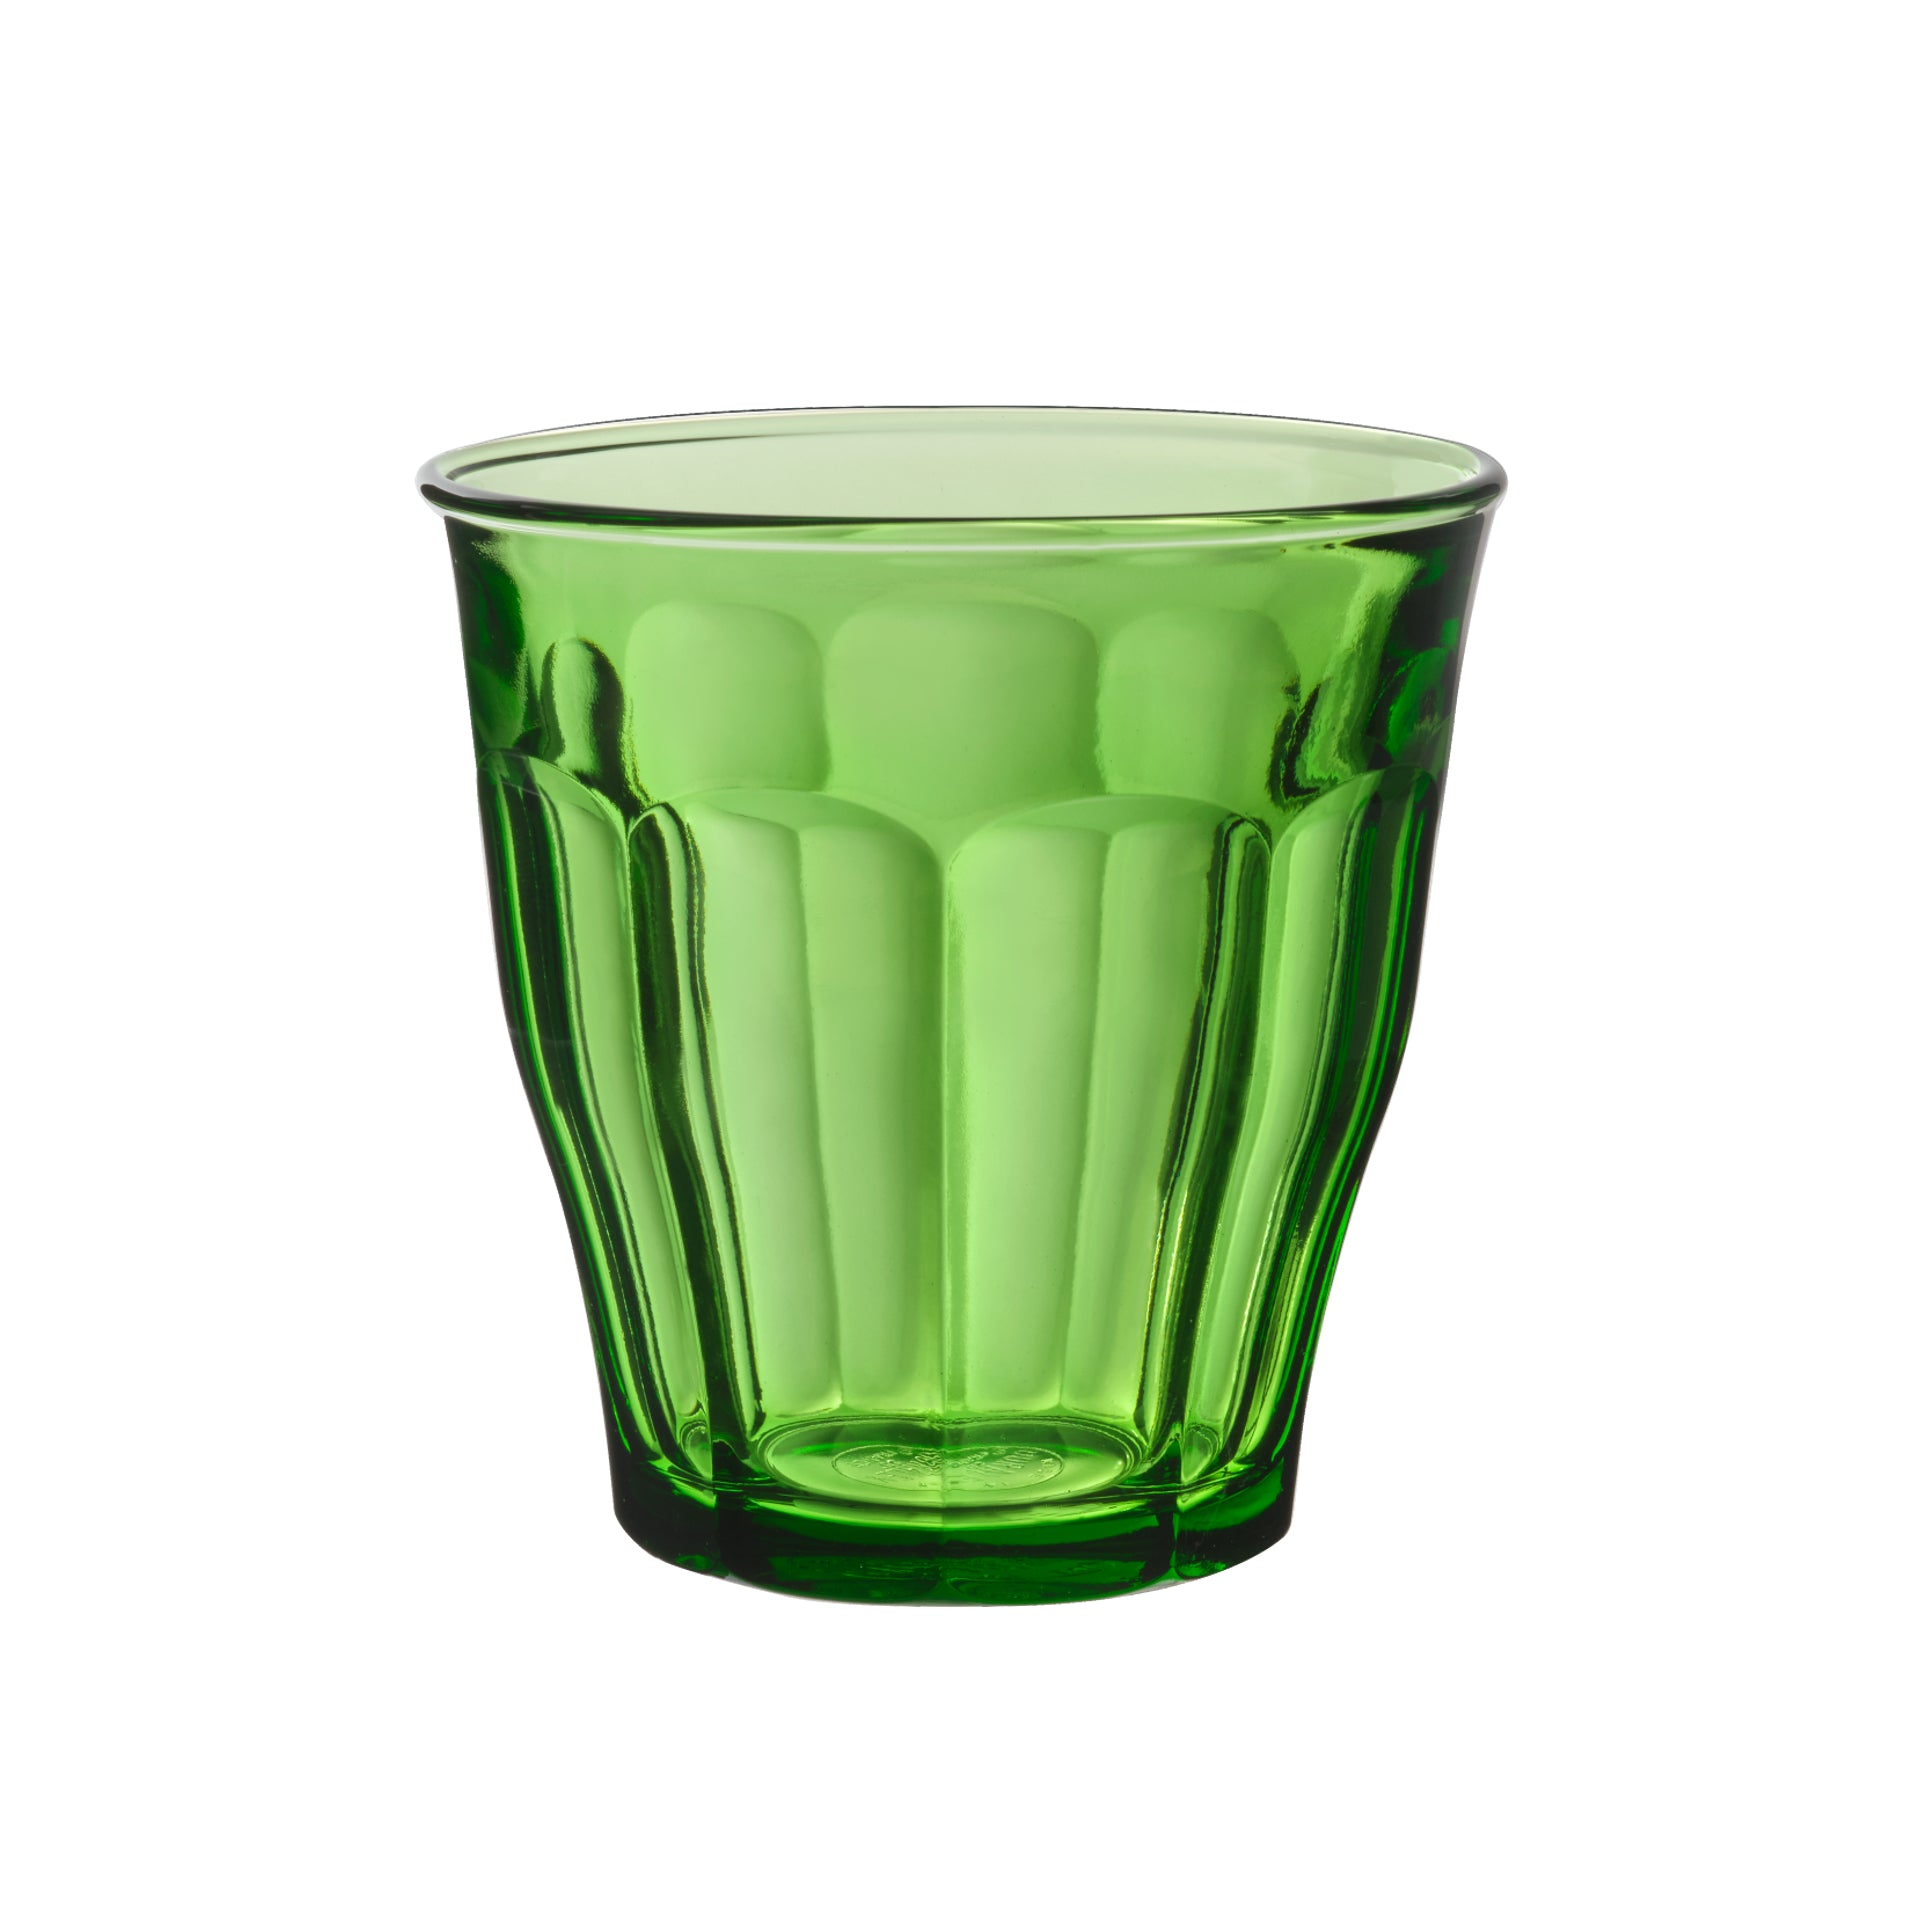 Le Picardie® Green Tumbler, Duralex USA